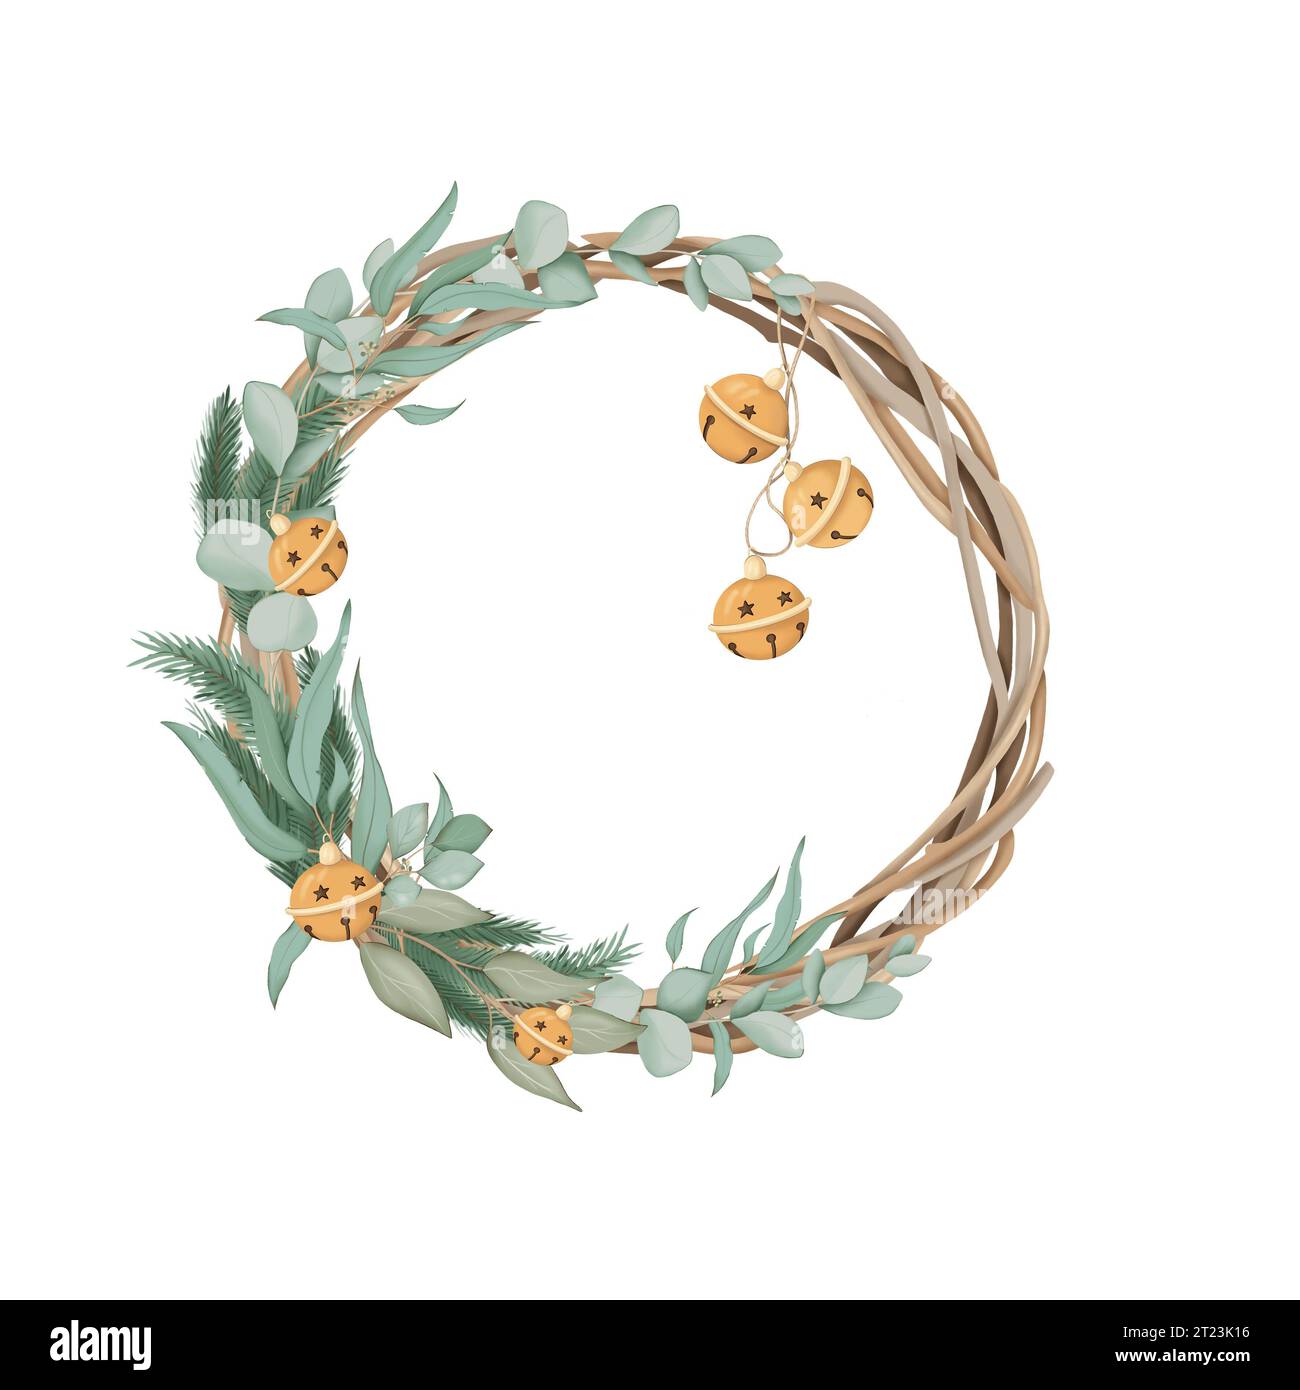 Christmas wreath. Hand-drawn illustration Stock Photo